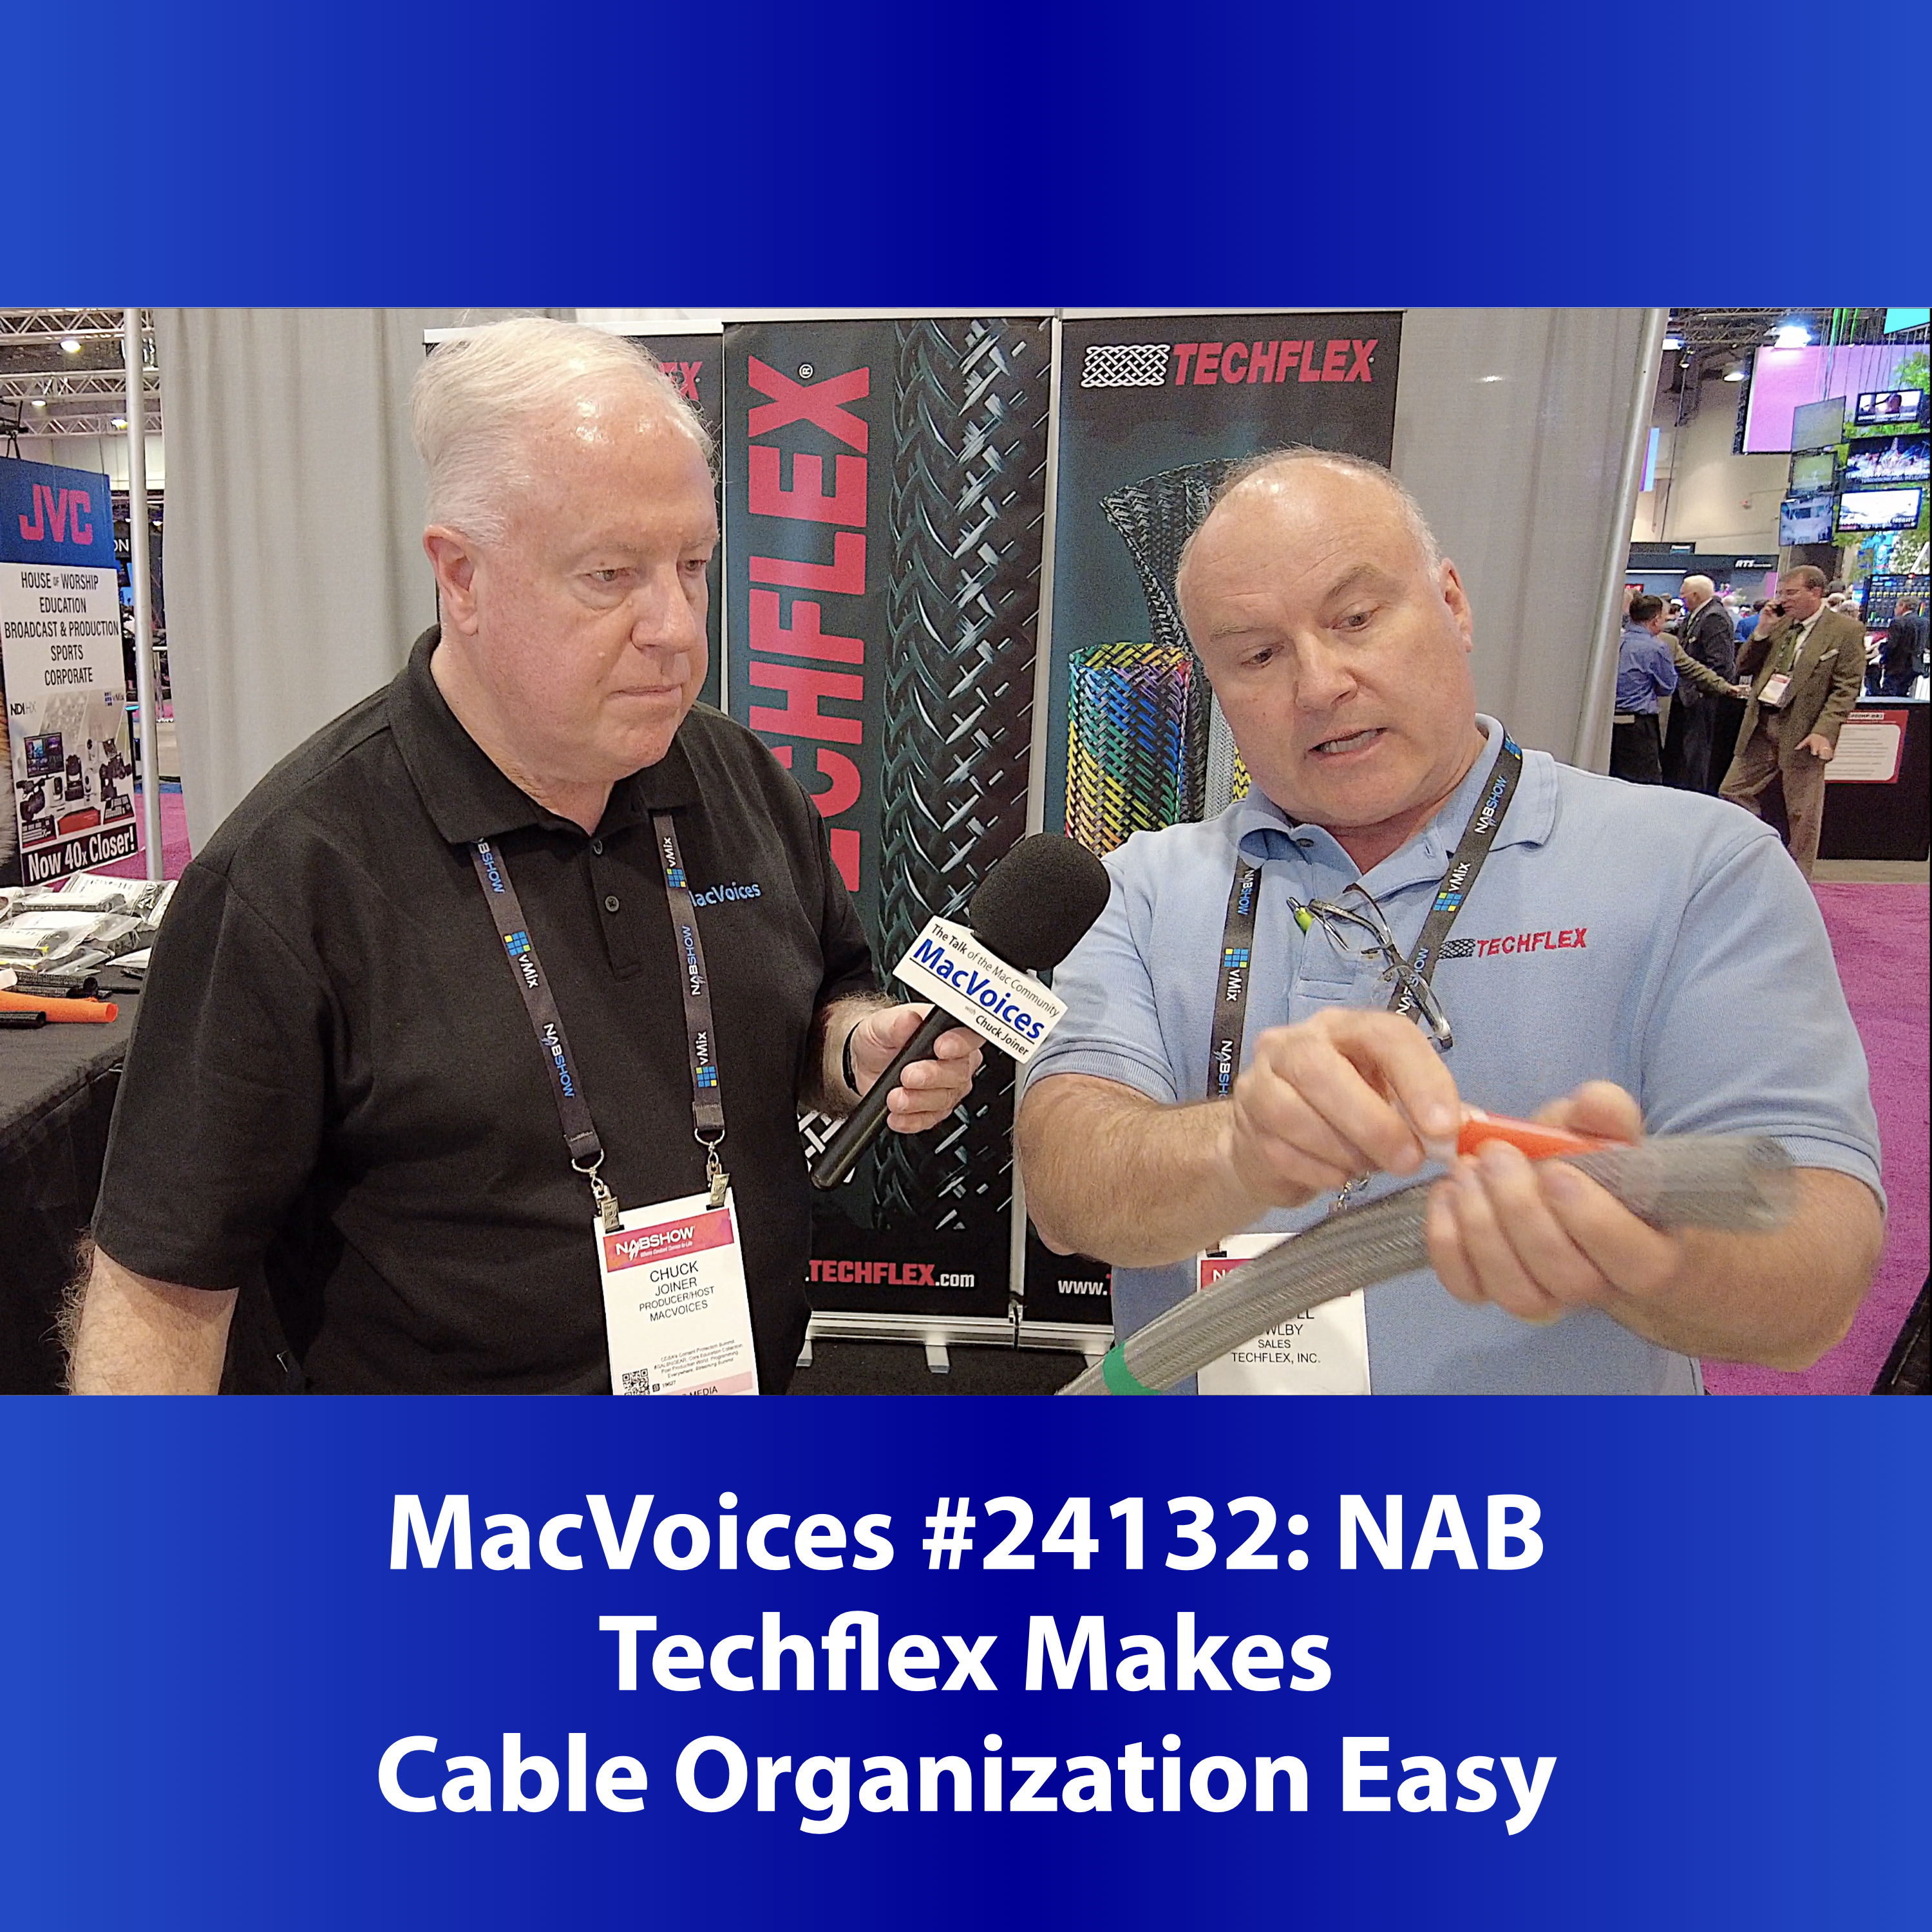 MacVoices #24132: NAB - Techflex Makes Cable Organization Easy